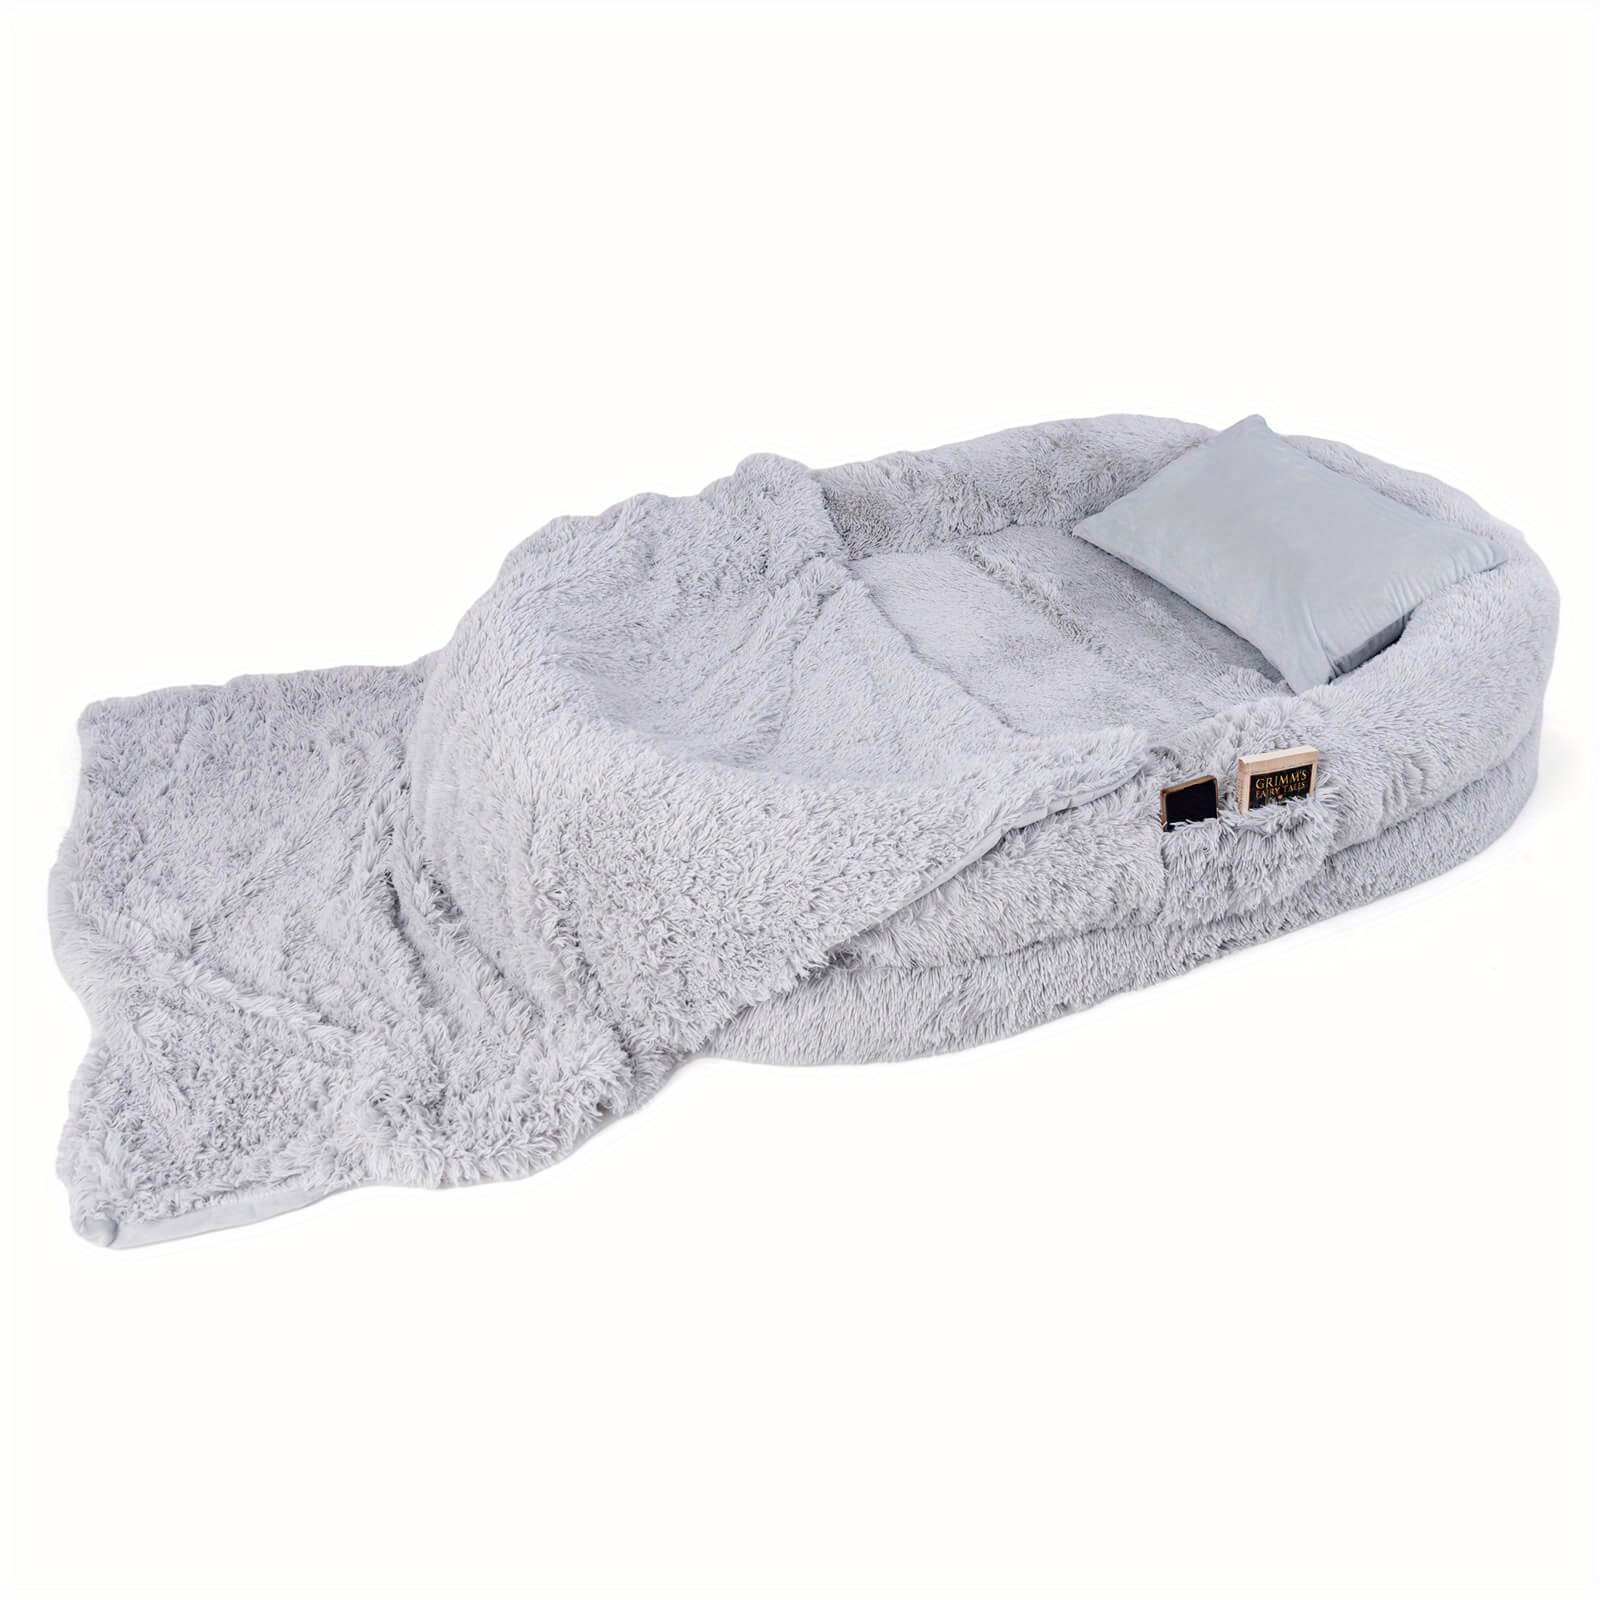 

Homasis 68" X 46" X 10" Bed Orthopedic Dog Bed W/ Soft Blanket Grey